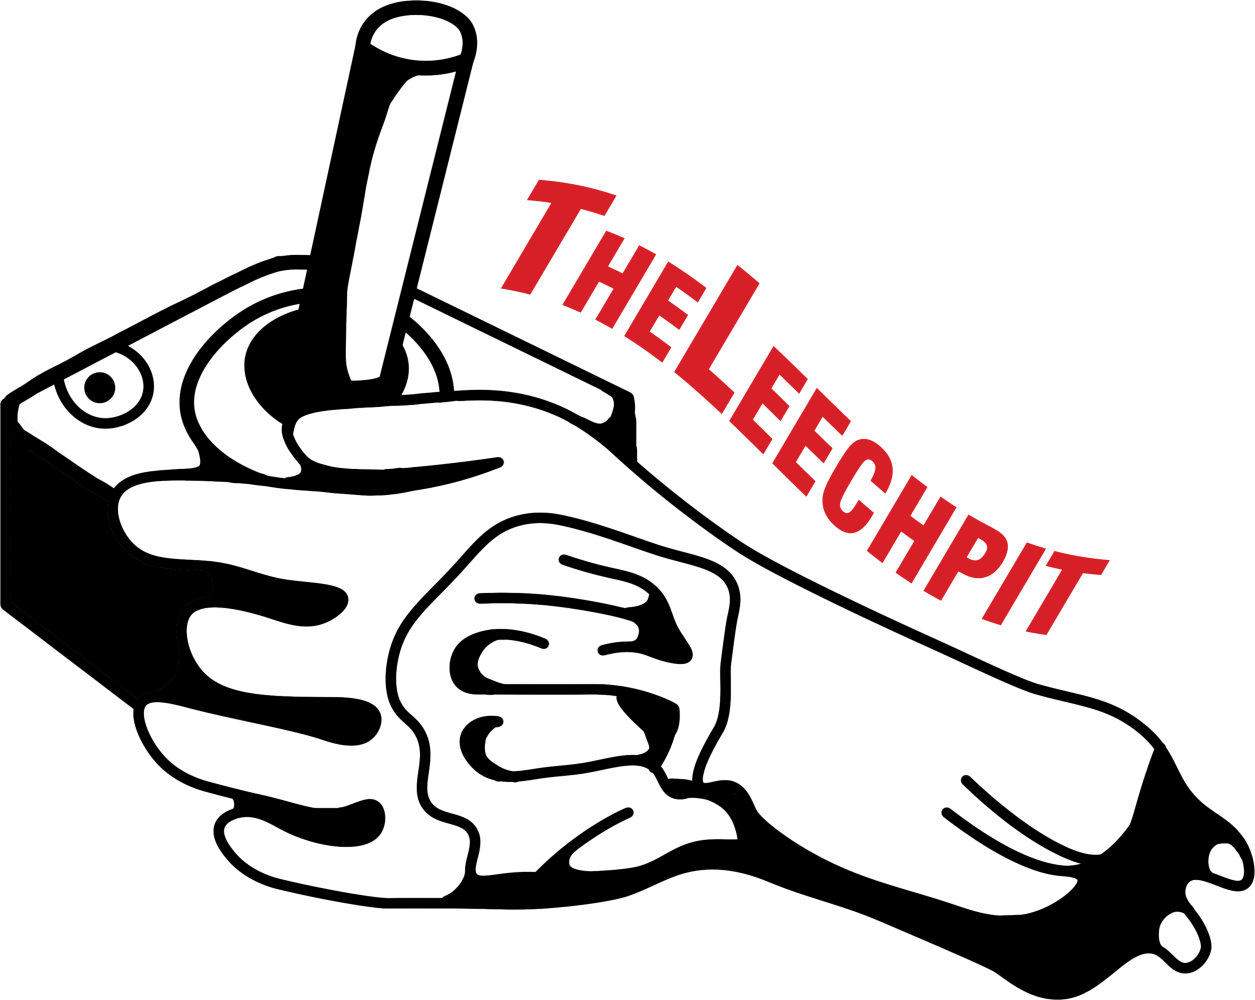 The Leechpit